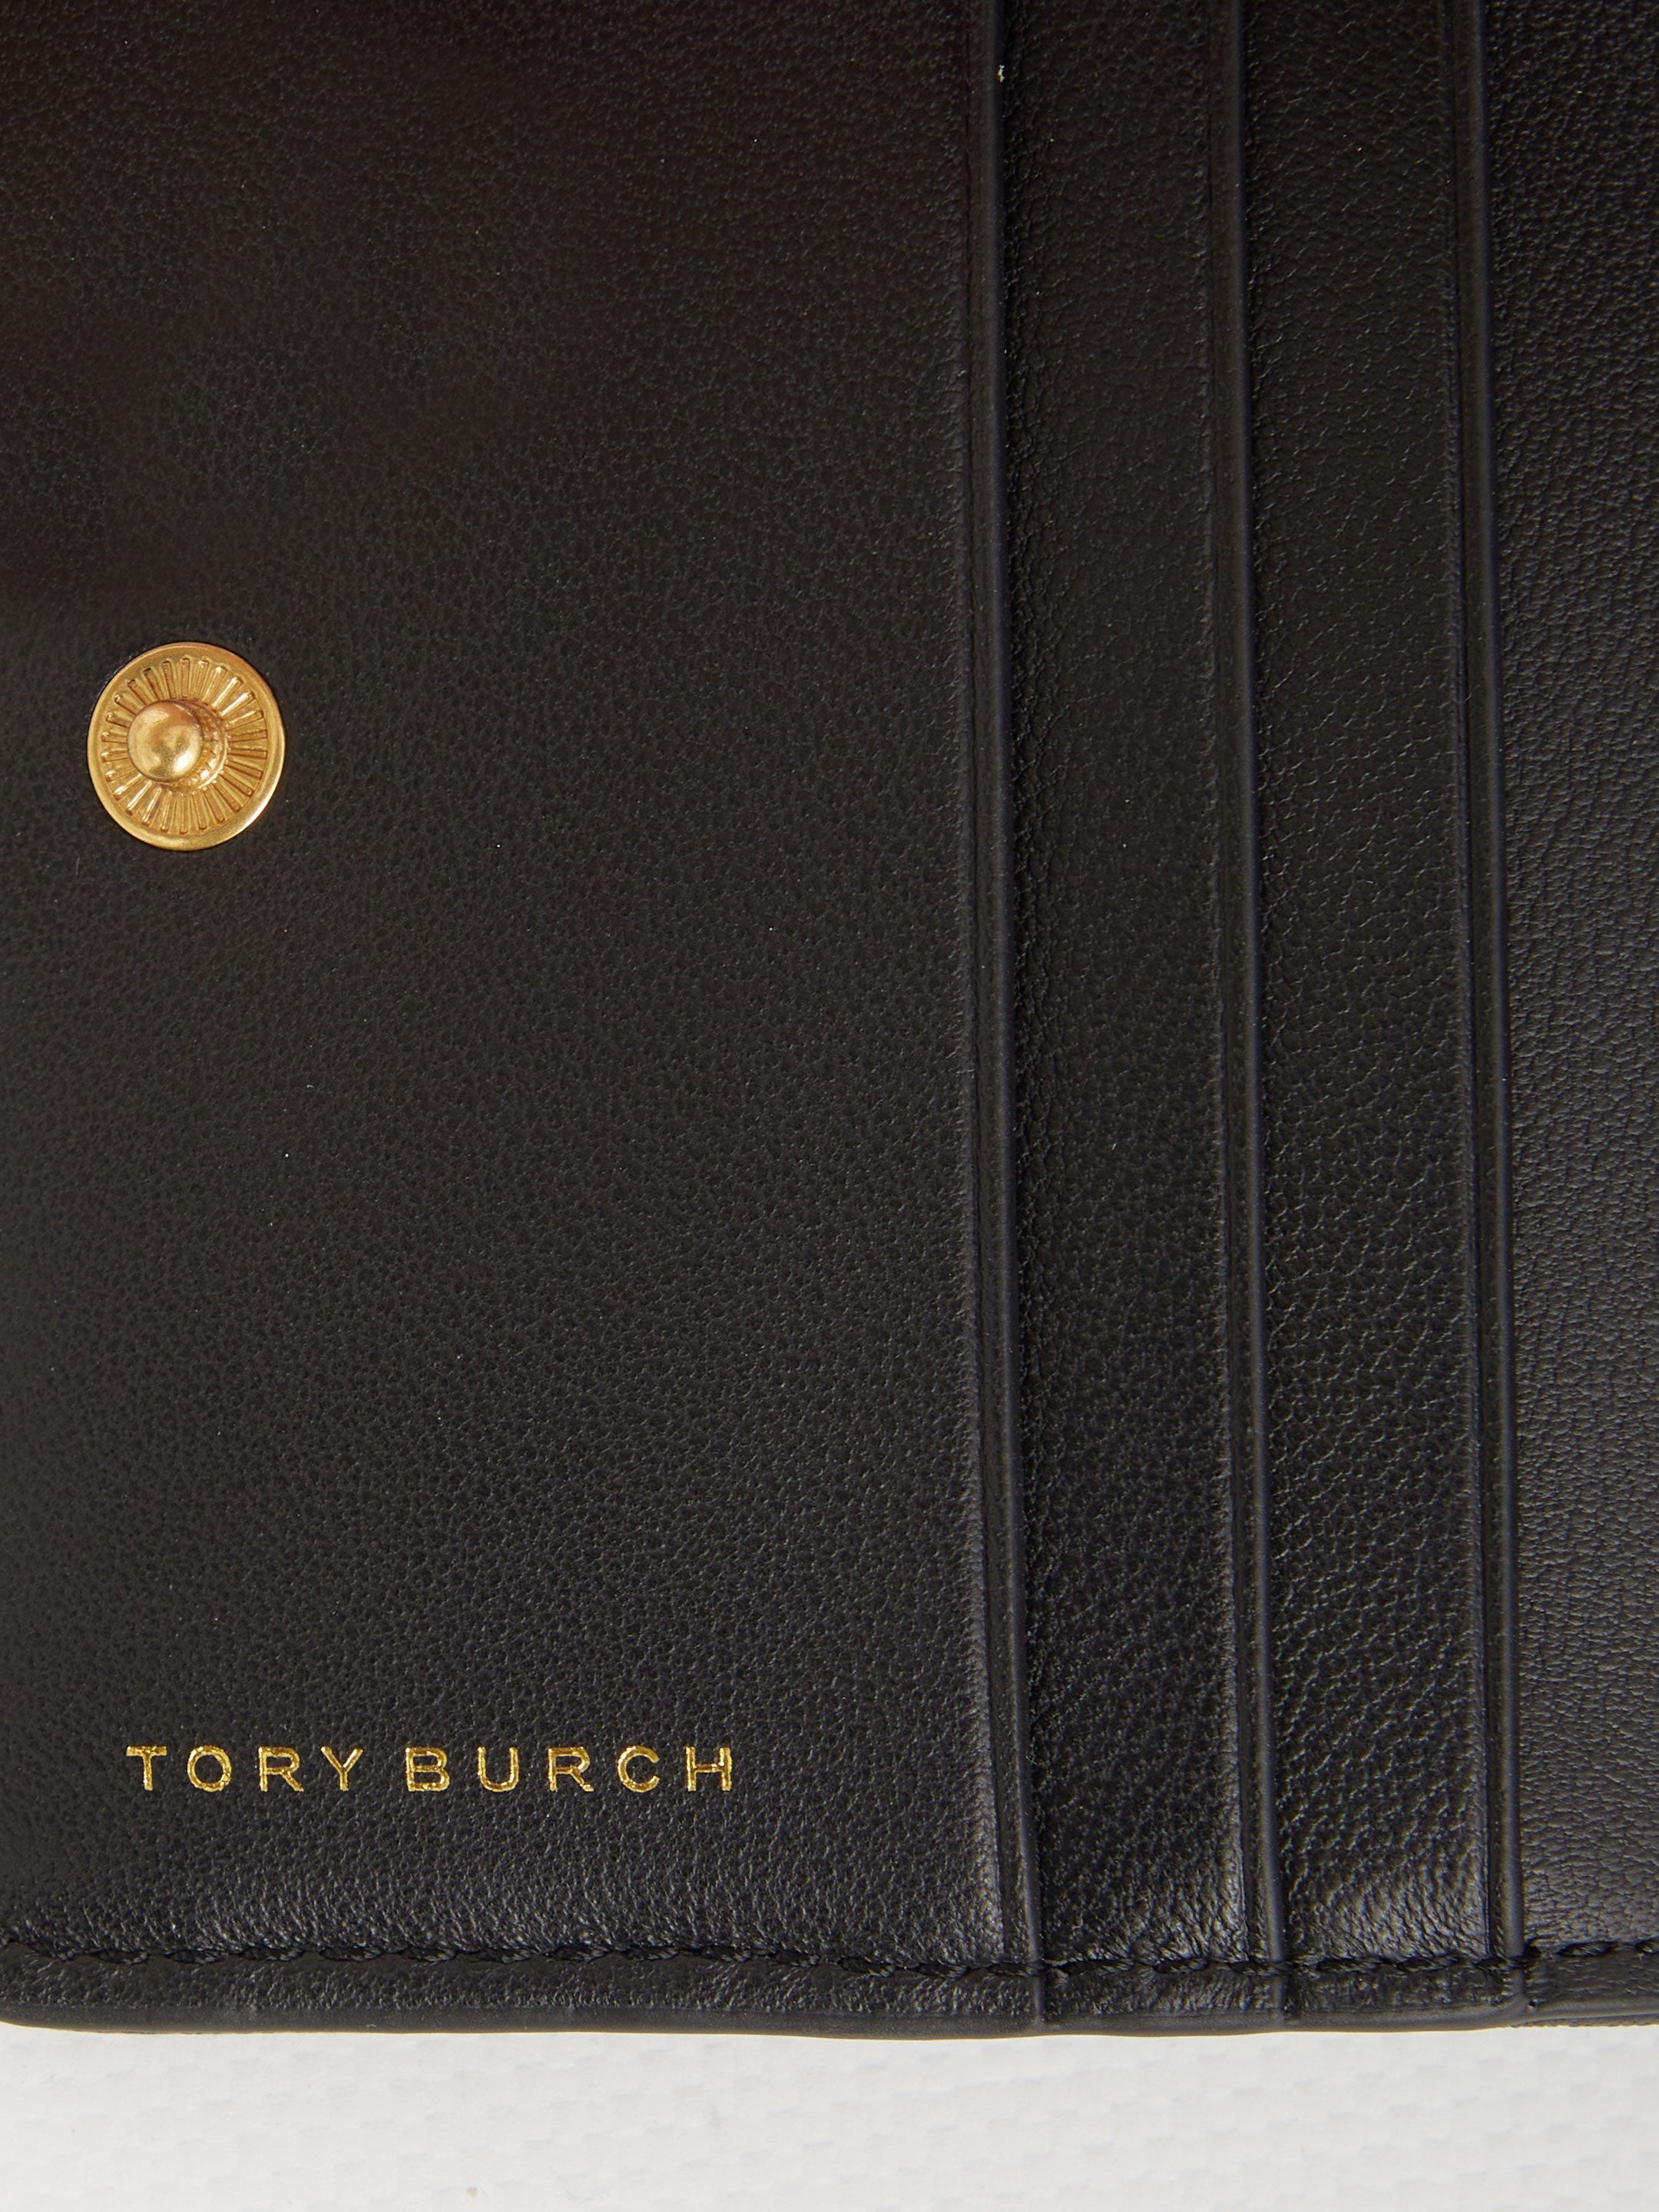 TORY-BURCH-OUTLET-SALE-Kira-Chevron-wallet-Taschen-QT-BLACK-ARCHIVE-COLLECTION-4.jpg